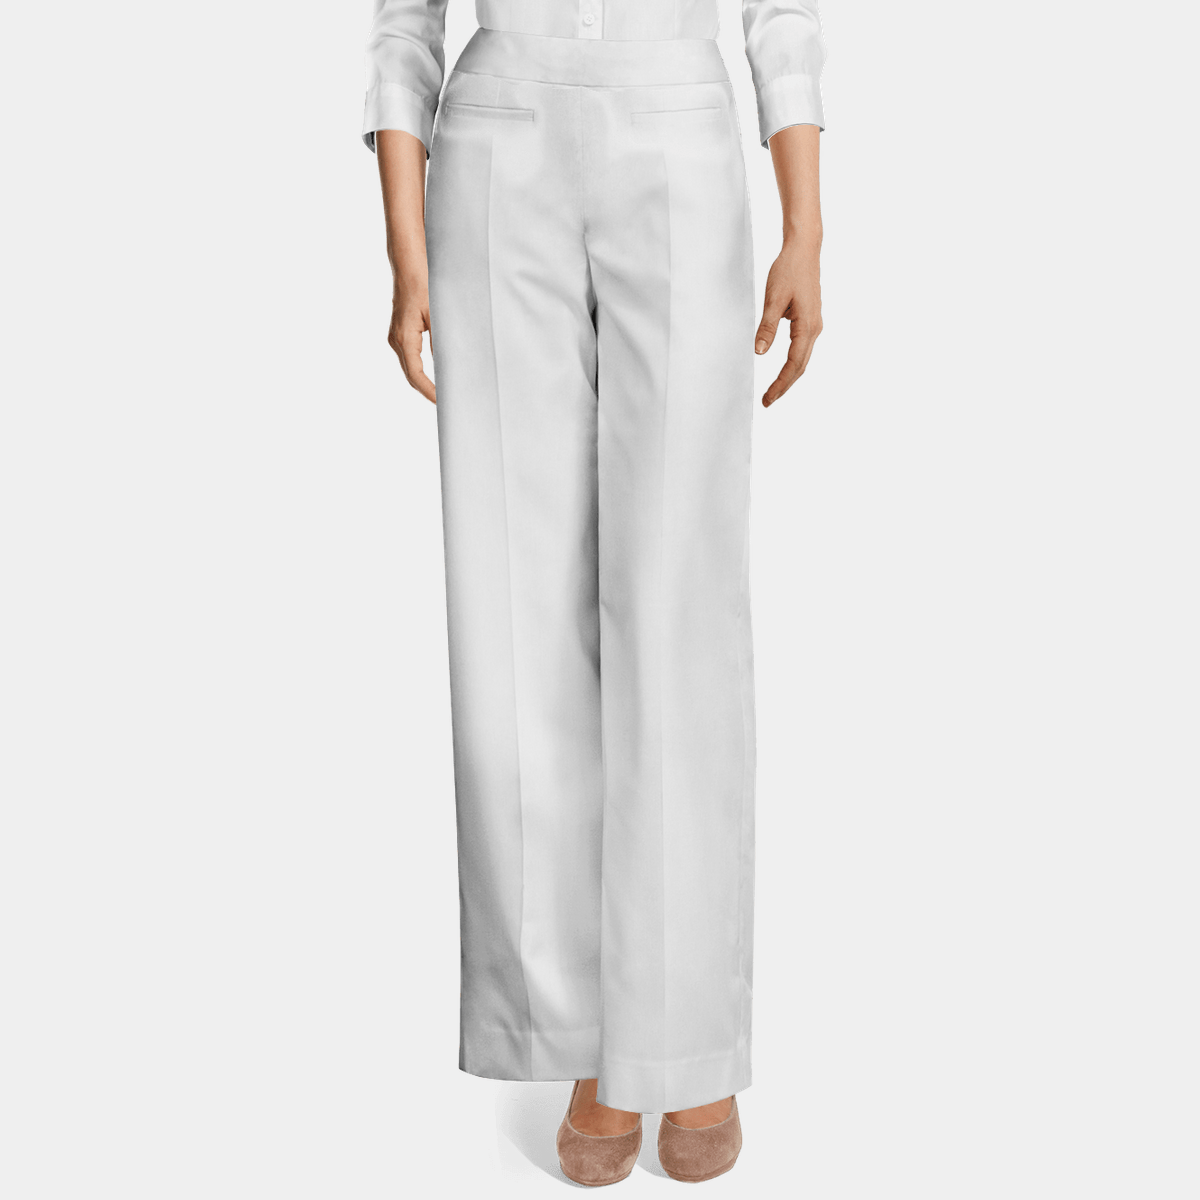 Maida Pants - High Waisted Wide Leg Pants in White